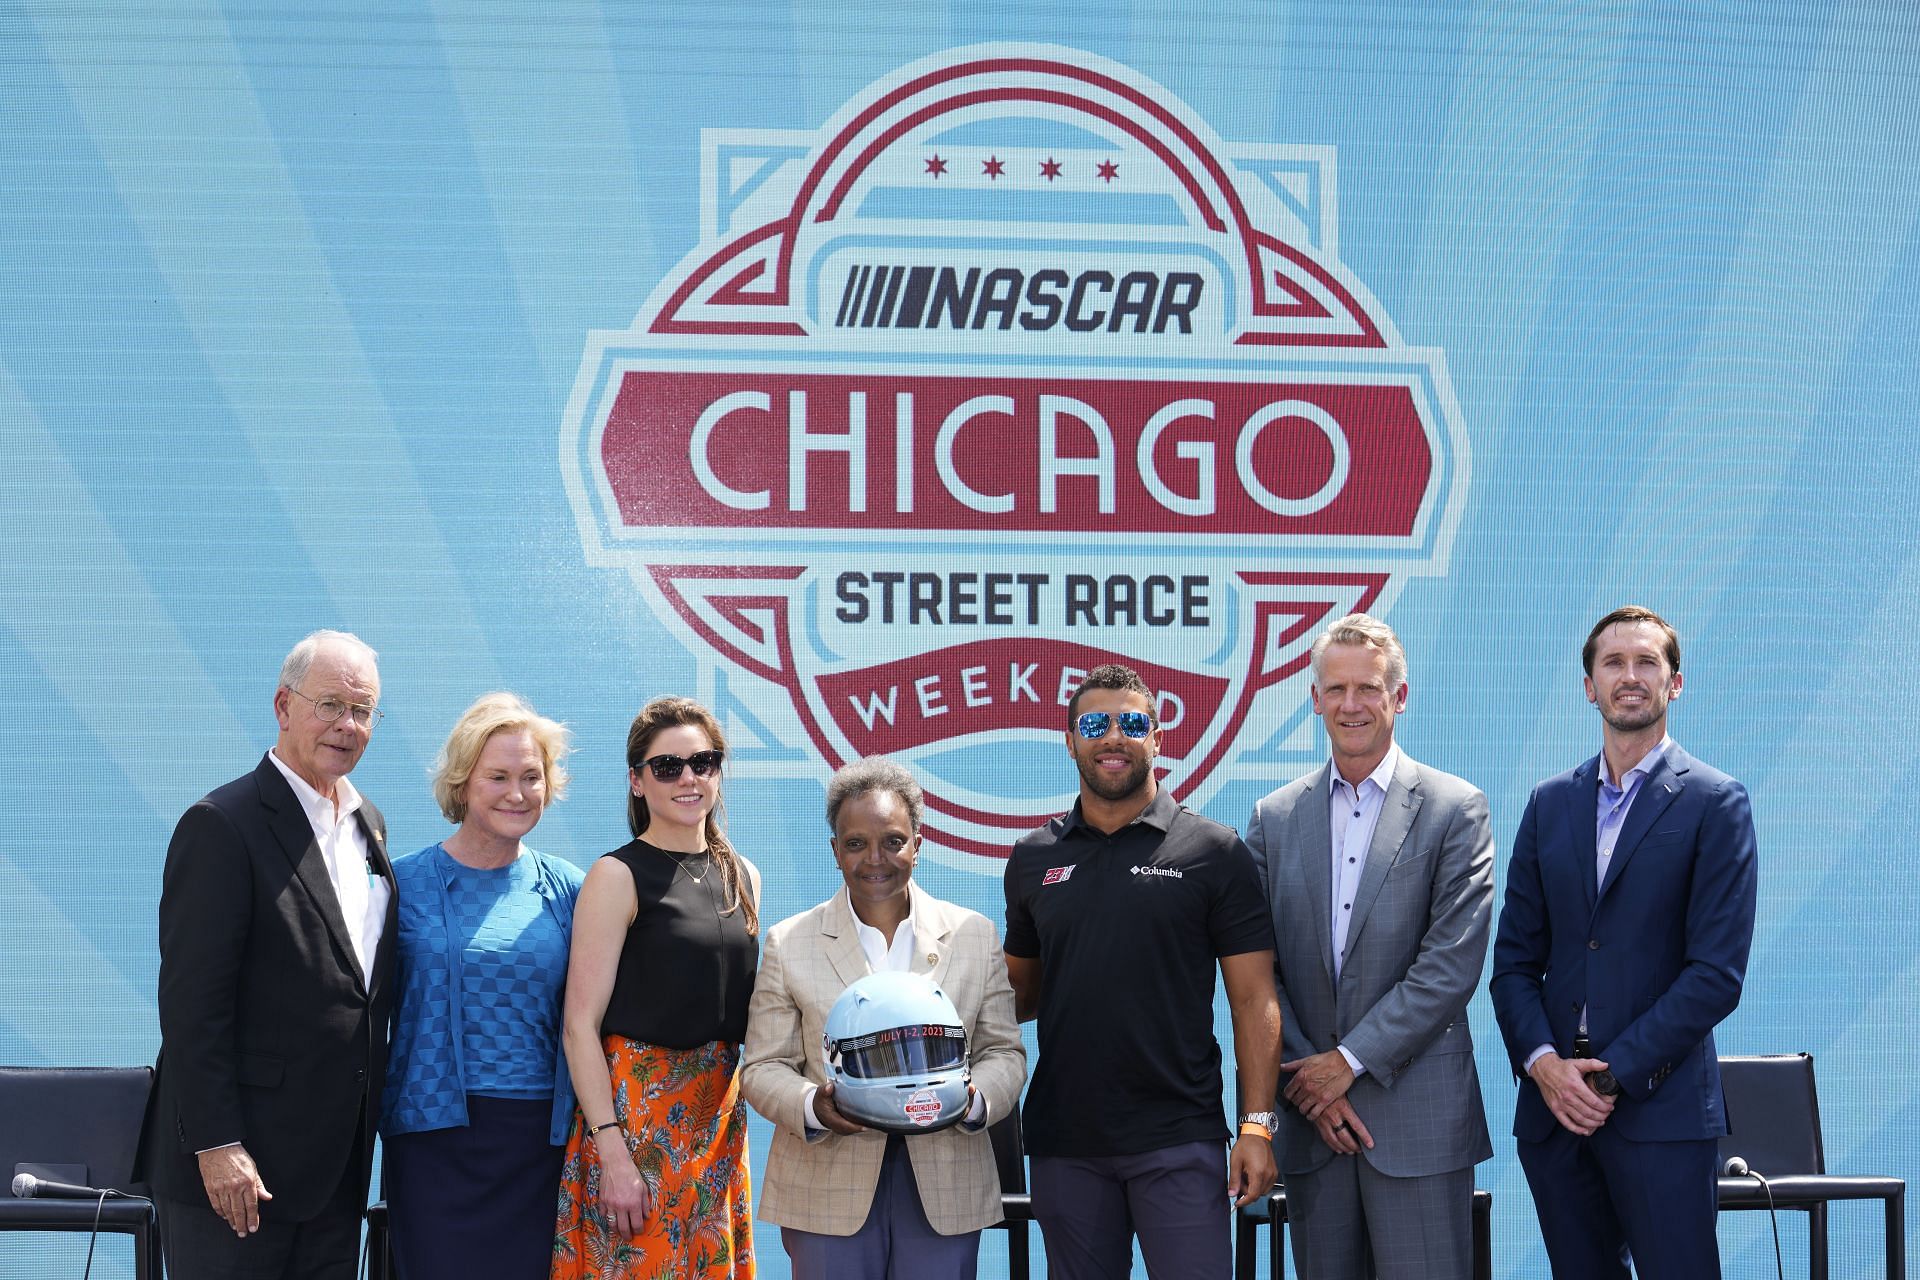 NASCAR Chicago Street Race Press Conference